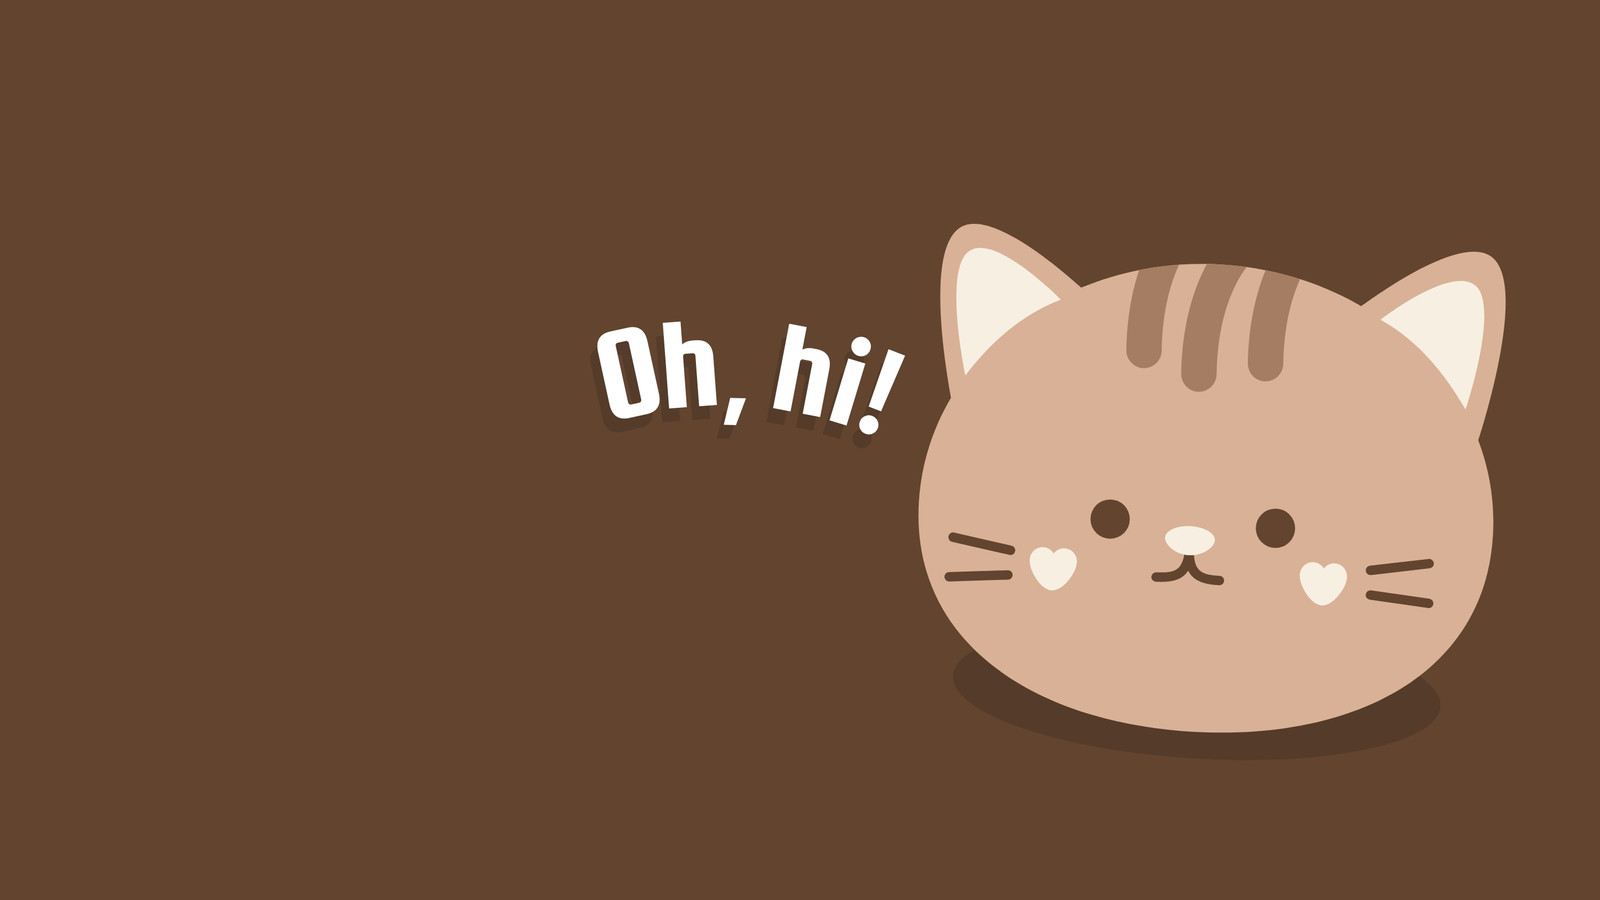 And Customizable Cute Cat Wallpaper Templates